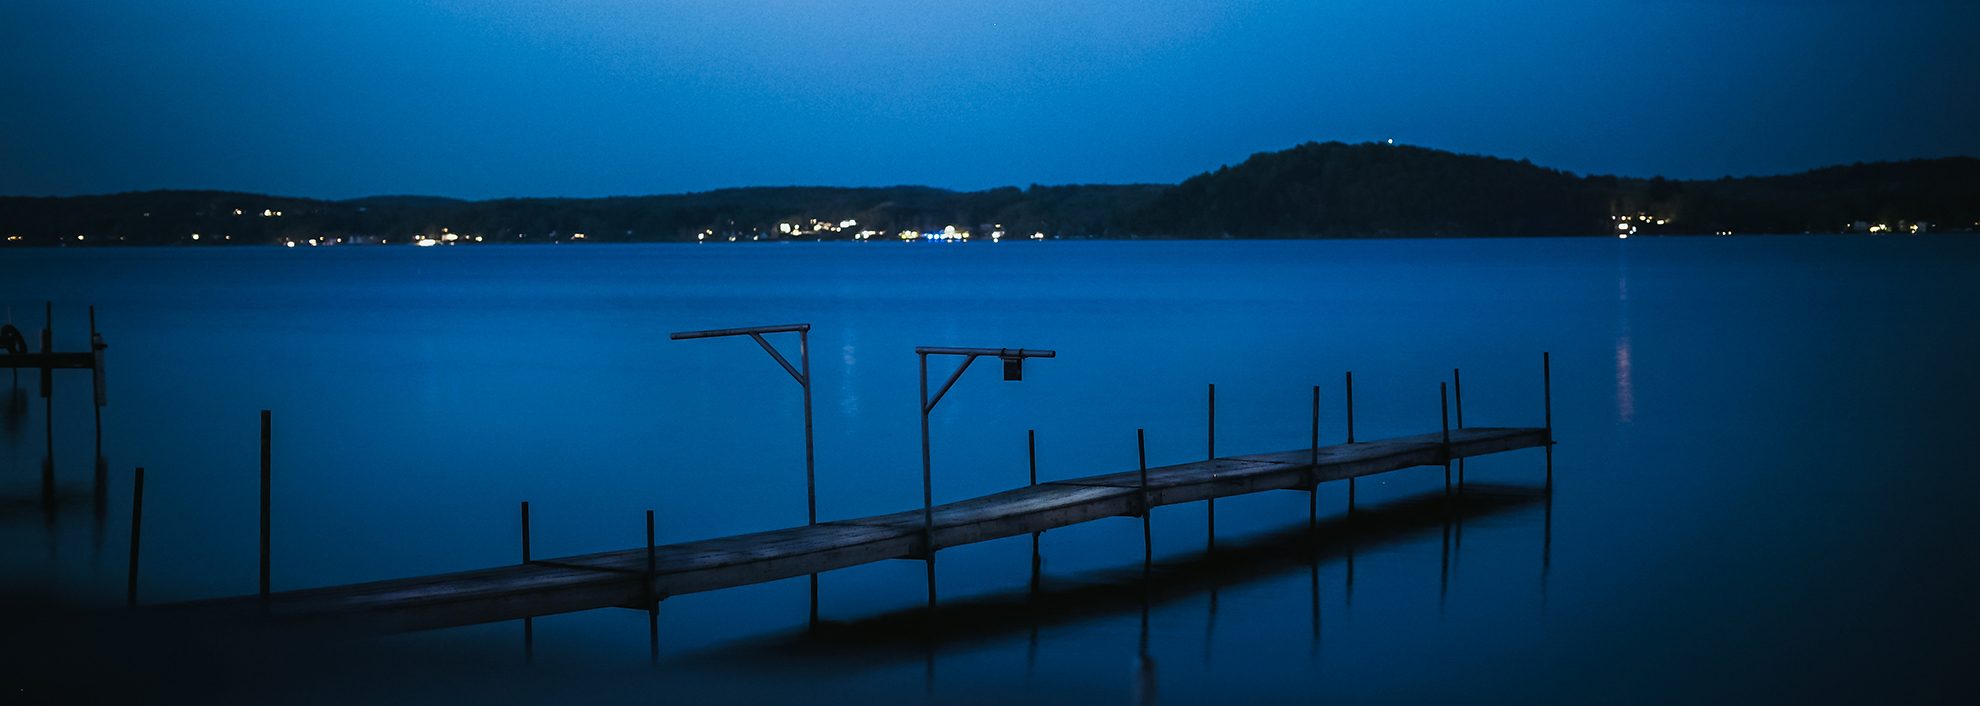 Saratoga Lake at night